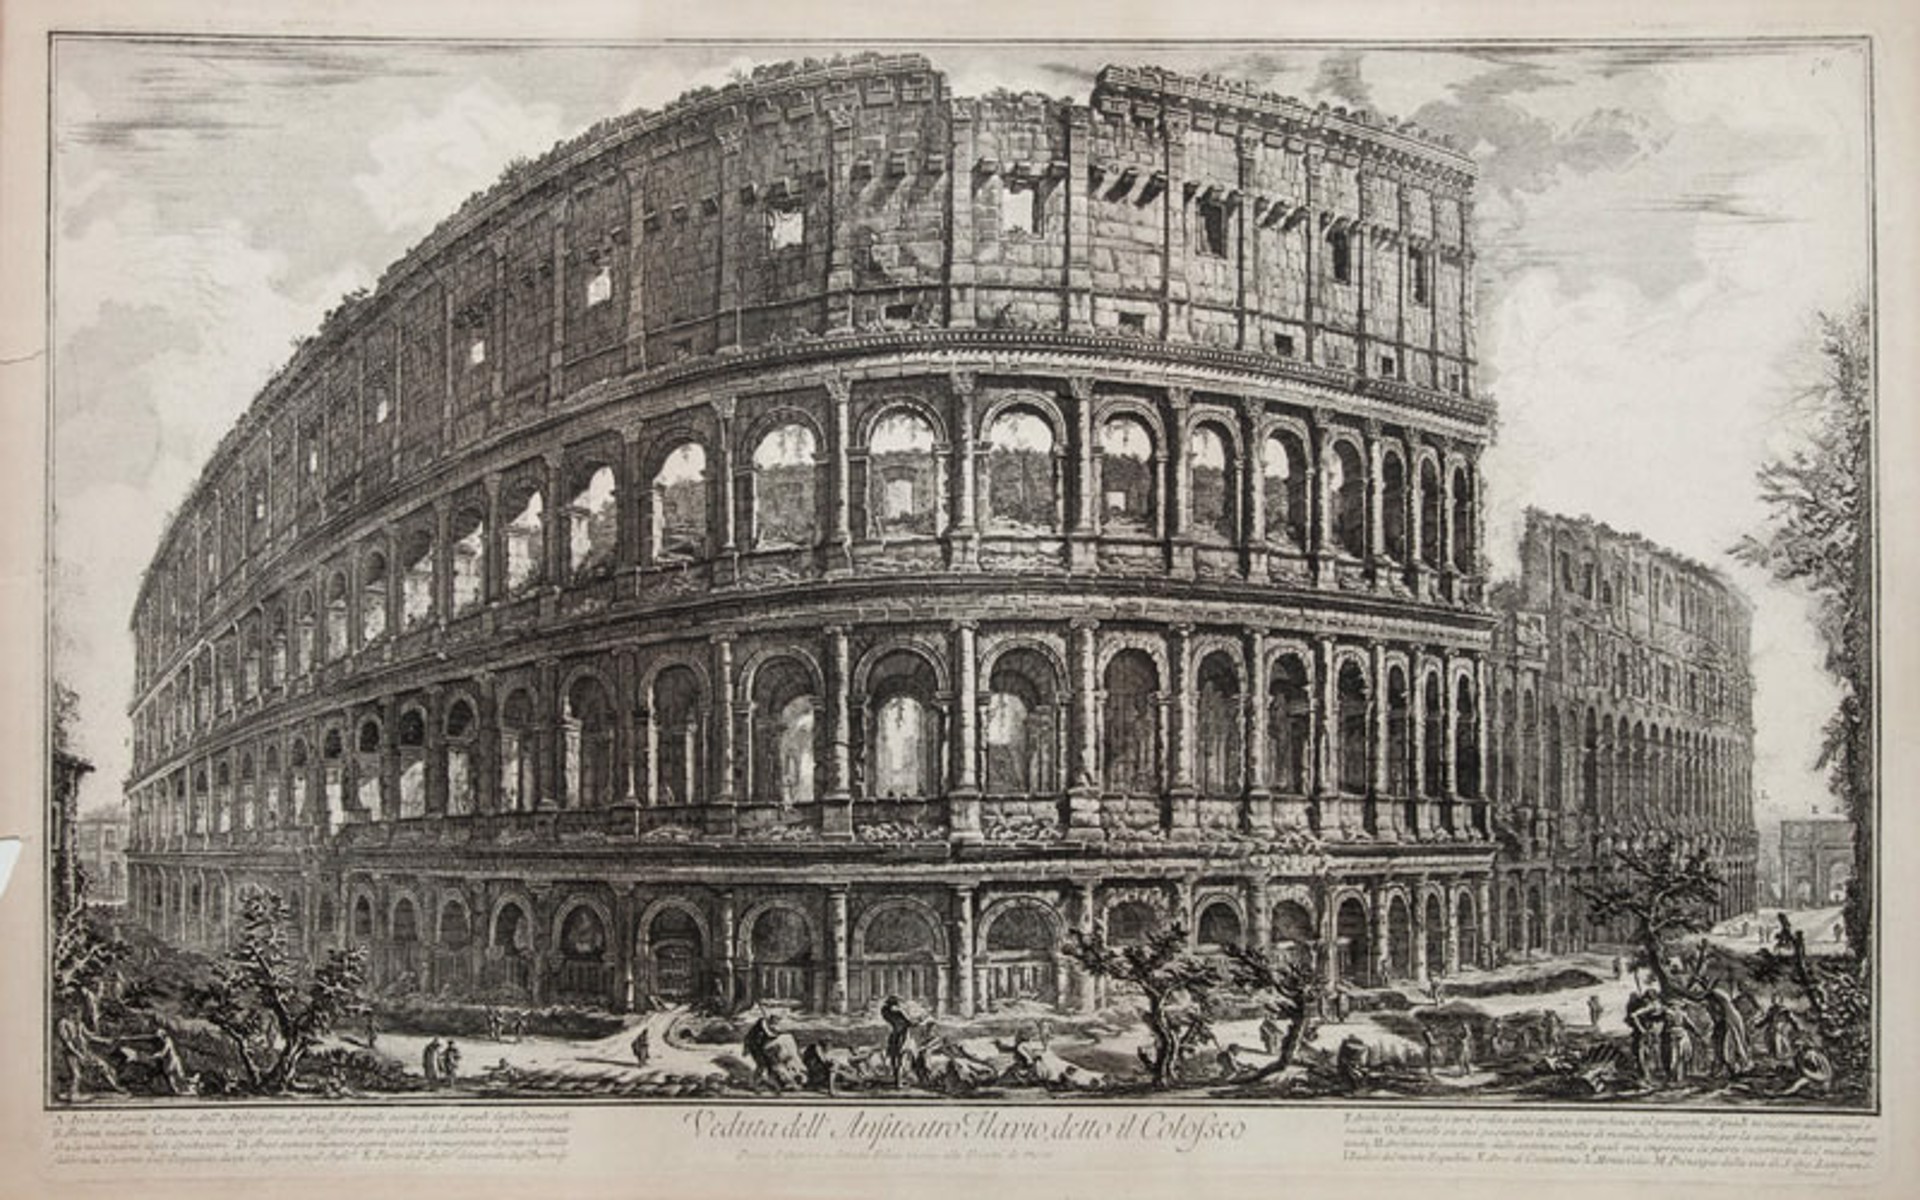 Colosseum by Francesco Piranesi